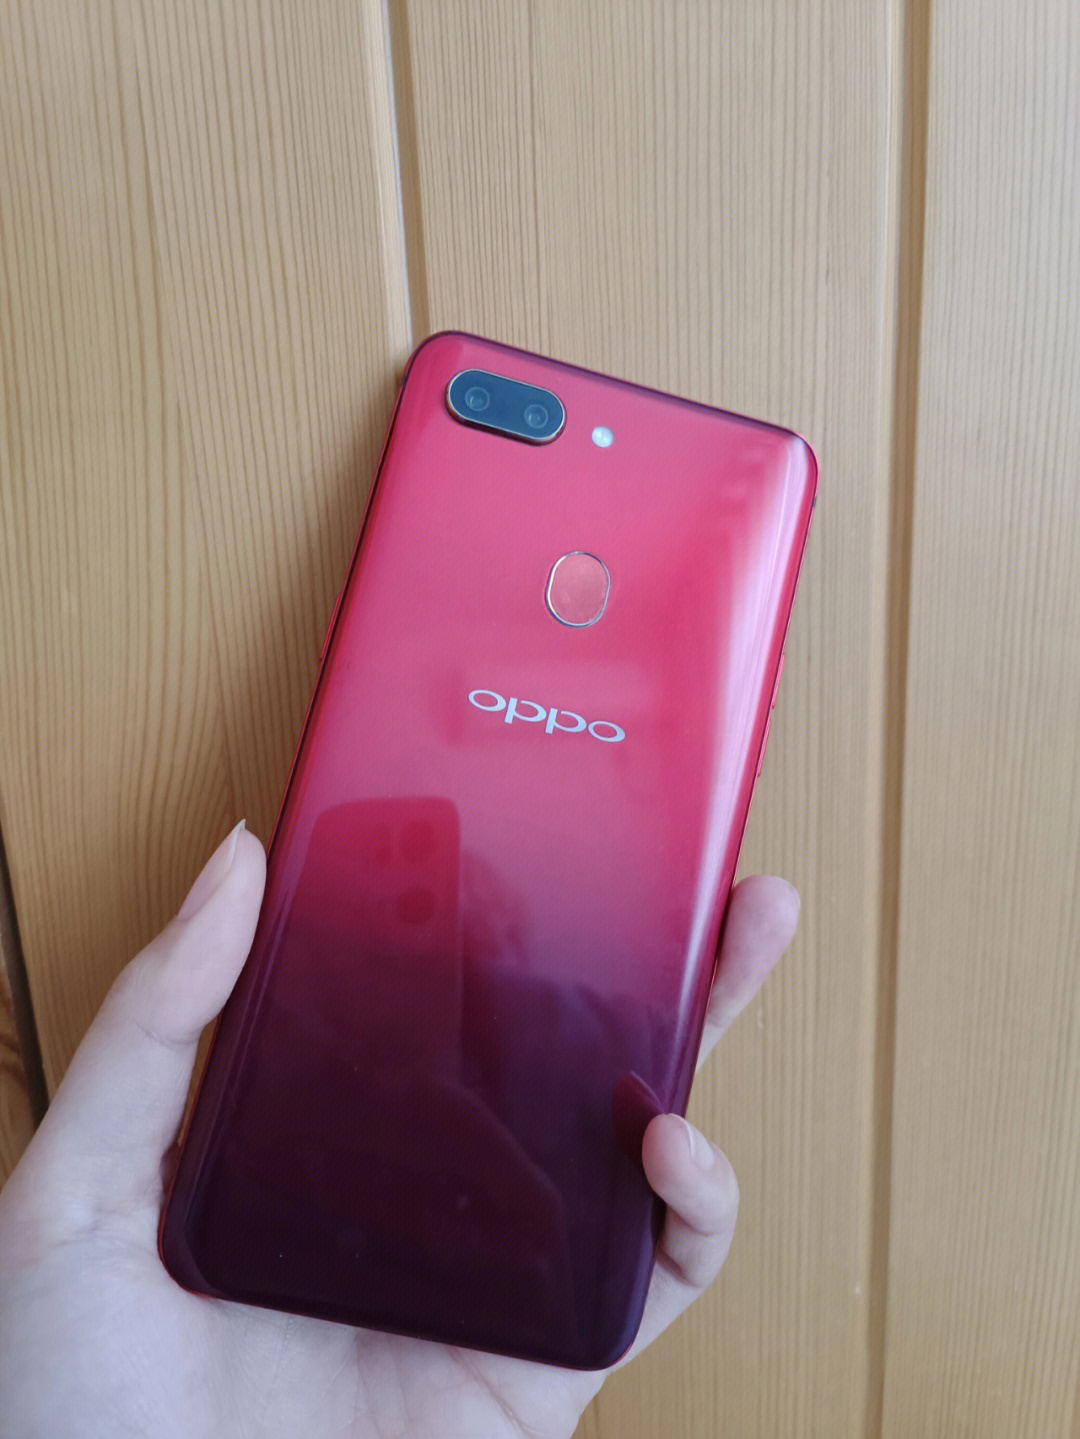 oppor15梦境版,红色,记得当时是2018年八月十五左右买的,当时是oppor7